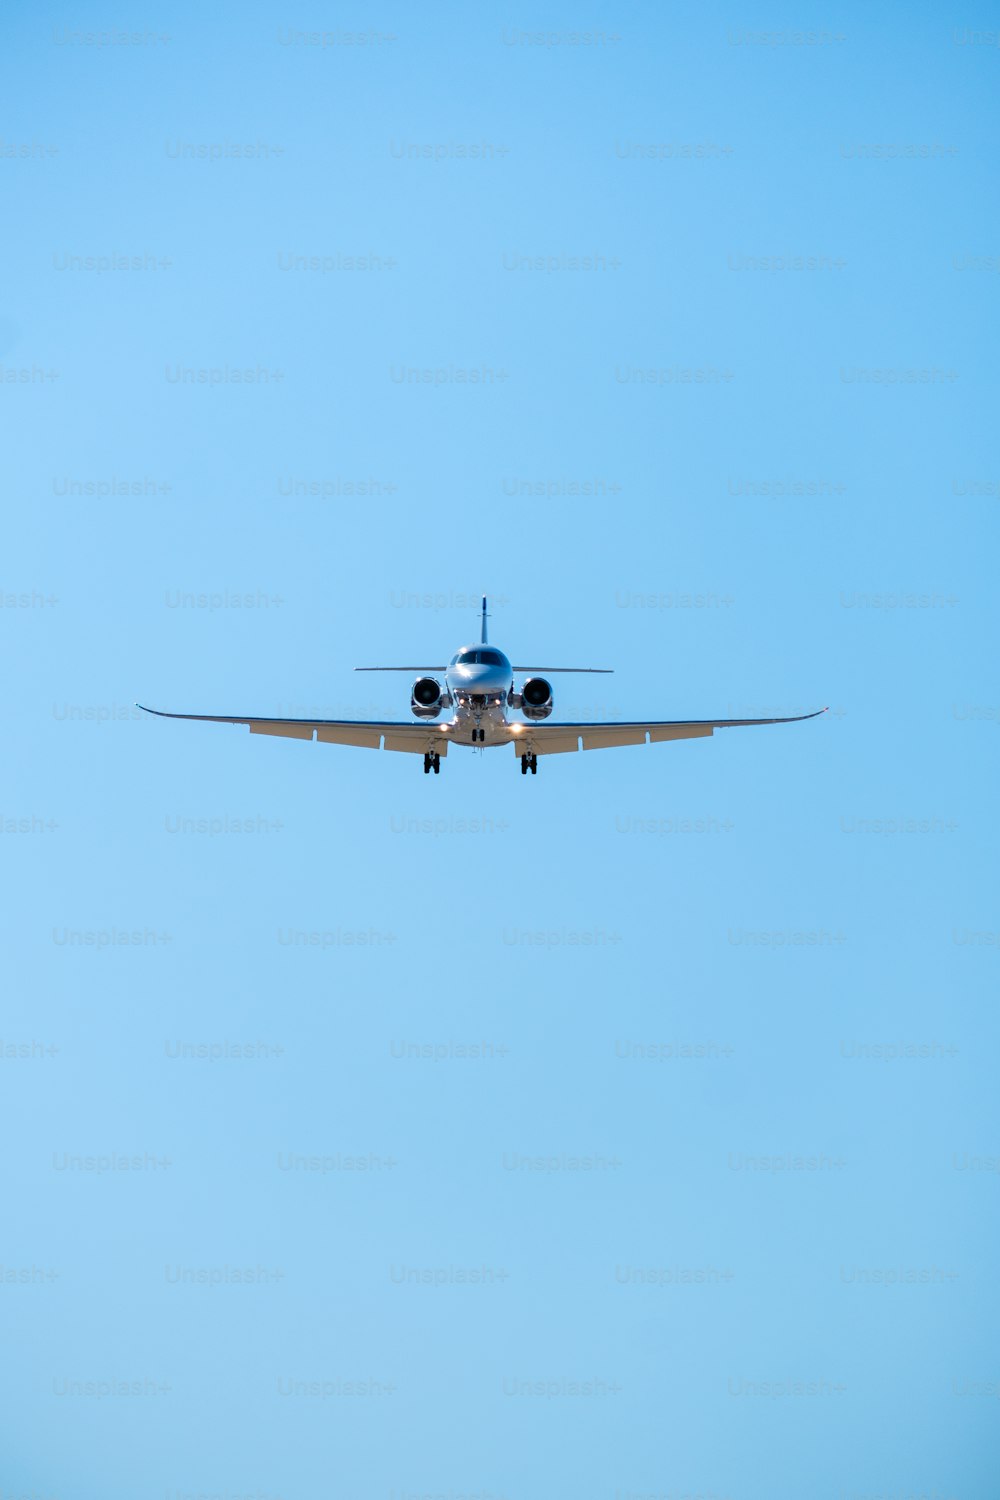 Un gran avión volando a través de un cielo azul